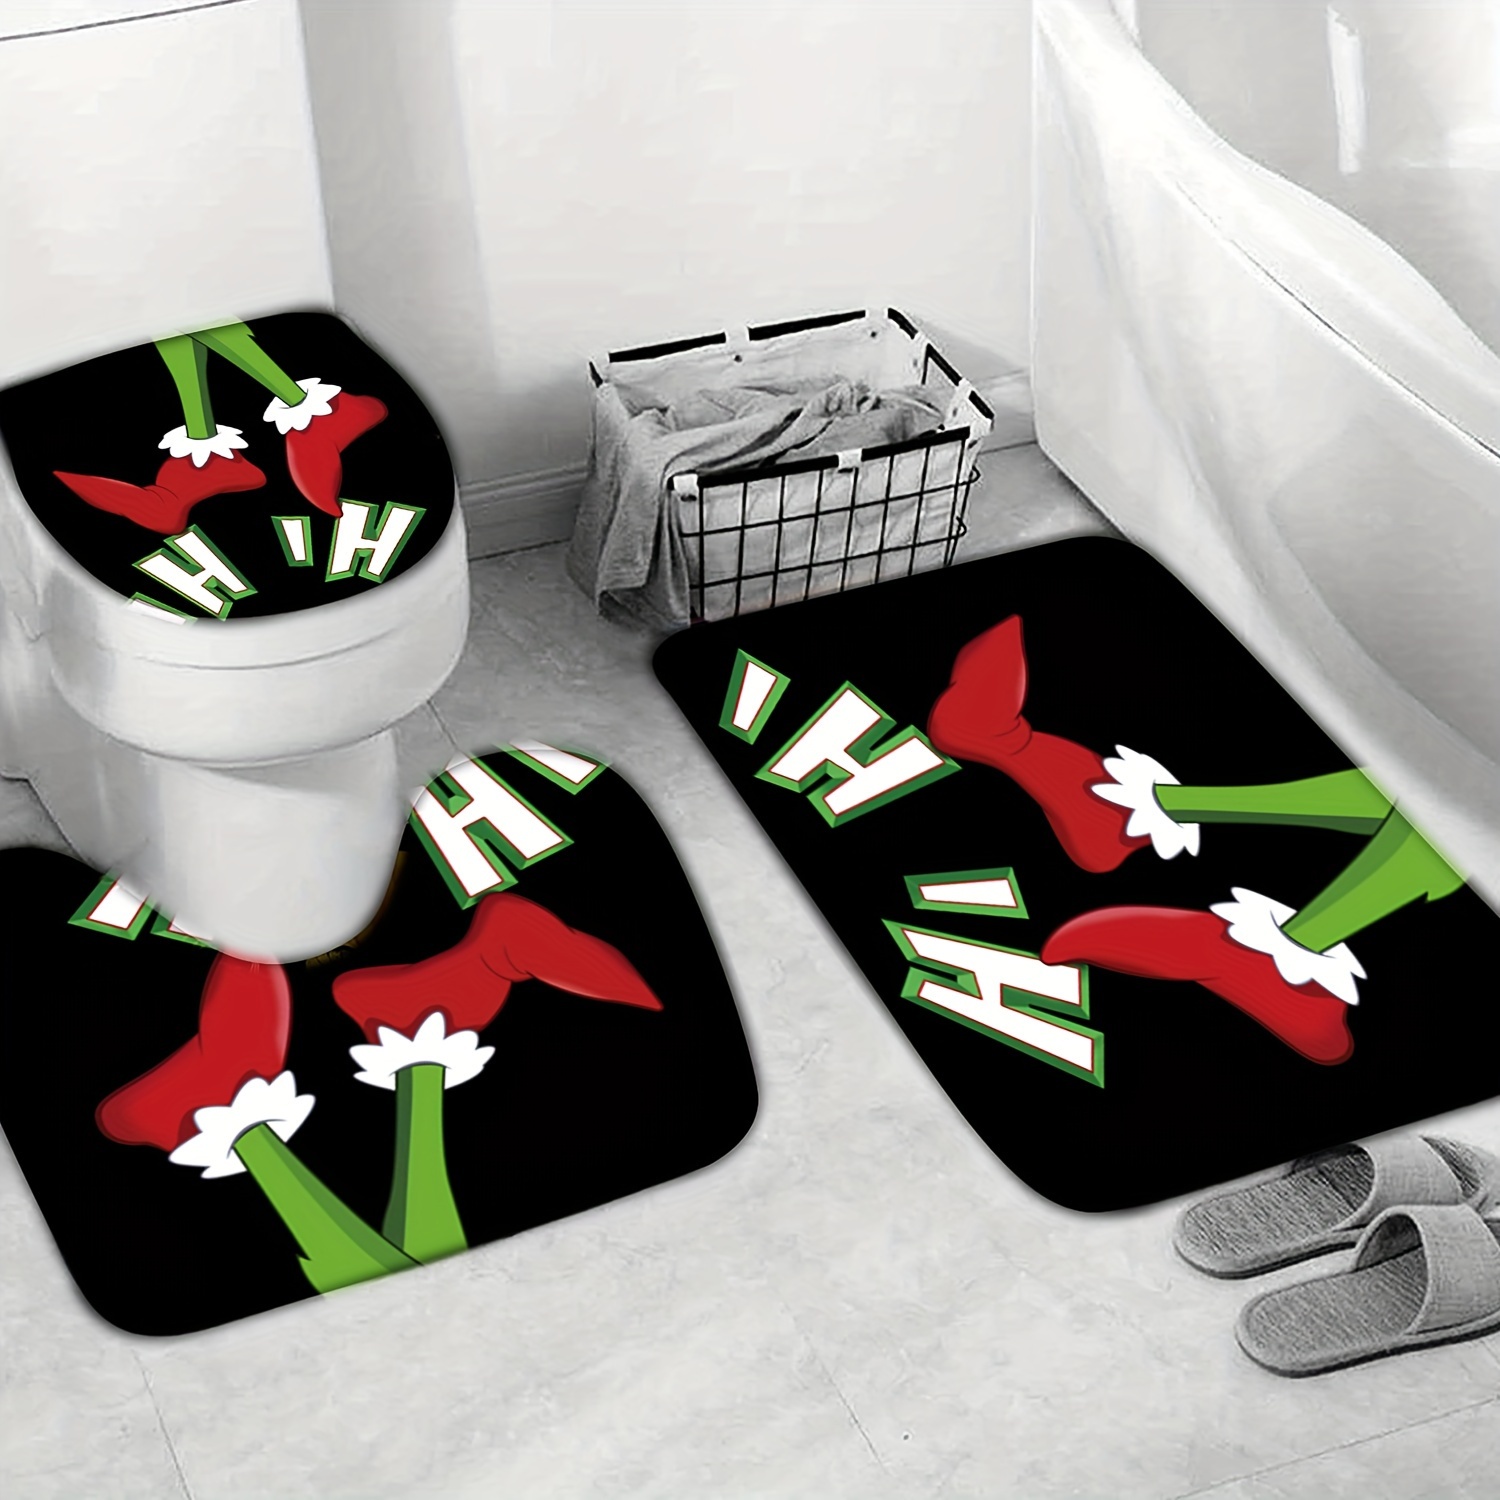 4 Piece Christmas Grinch Bathroom Decorations Grinch Decor Toilet